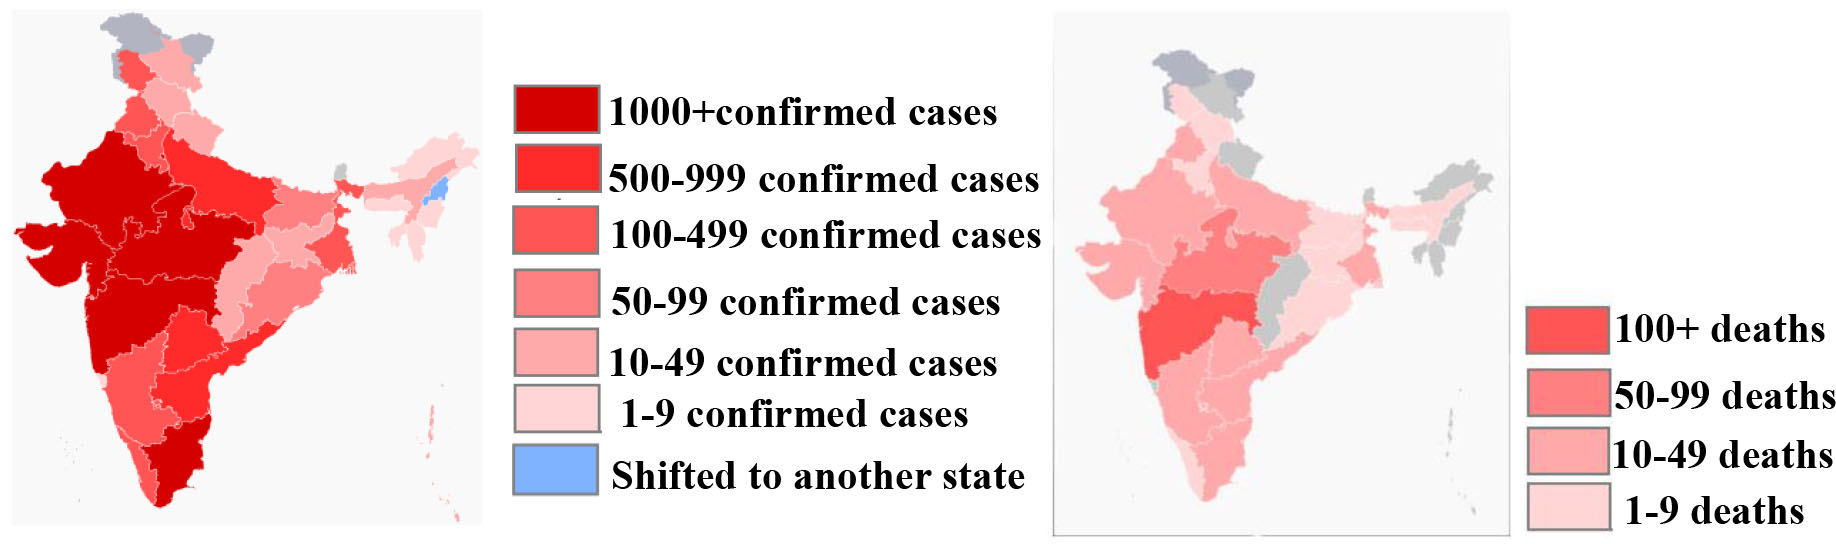 Map of coronavirus pandemic in India33https://en.wikipedia.org/wiki/2020_coronavirus_pandemic_in_India.. 
			